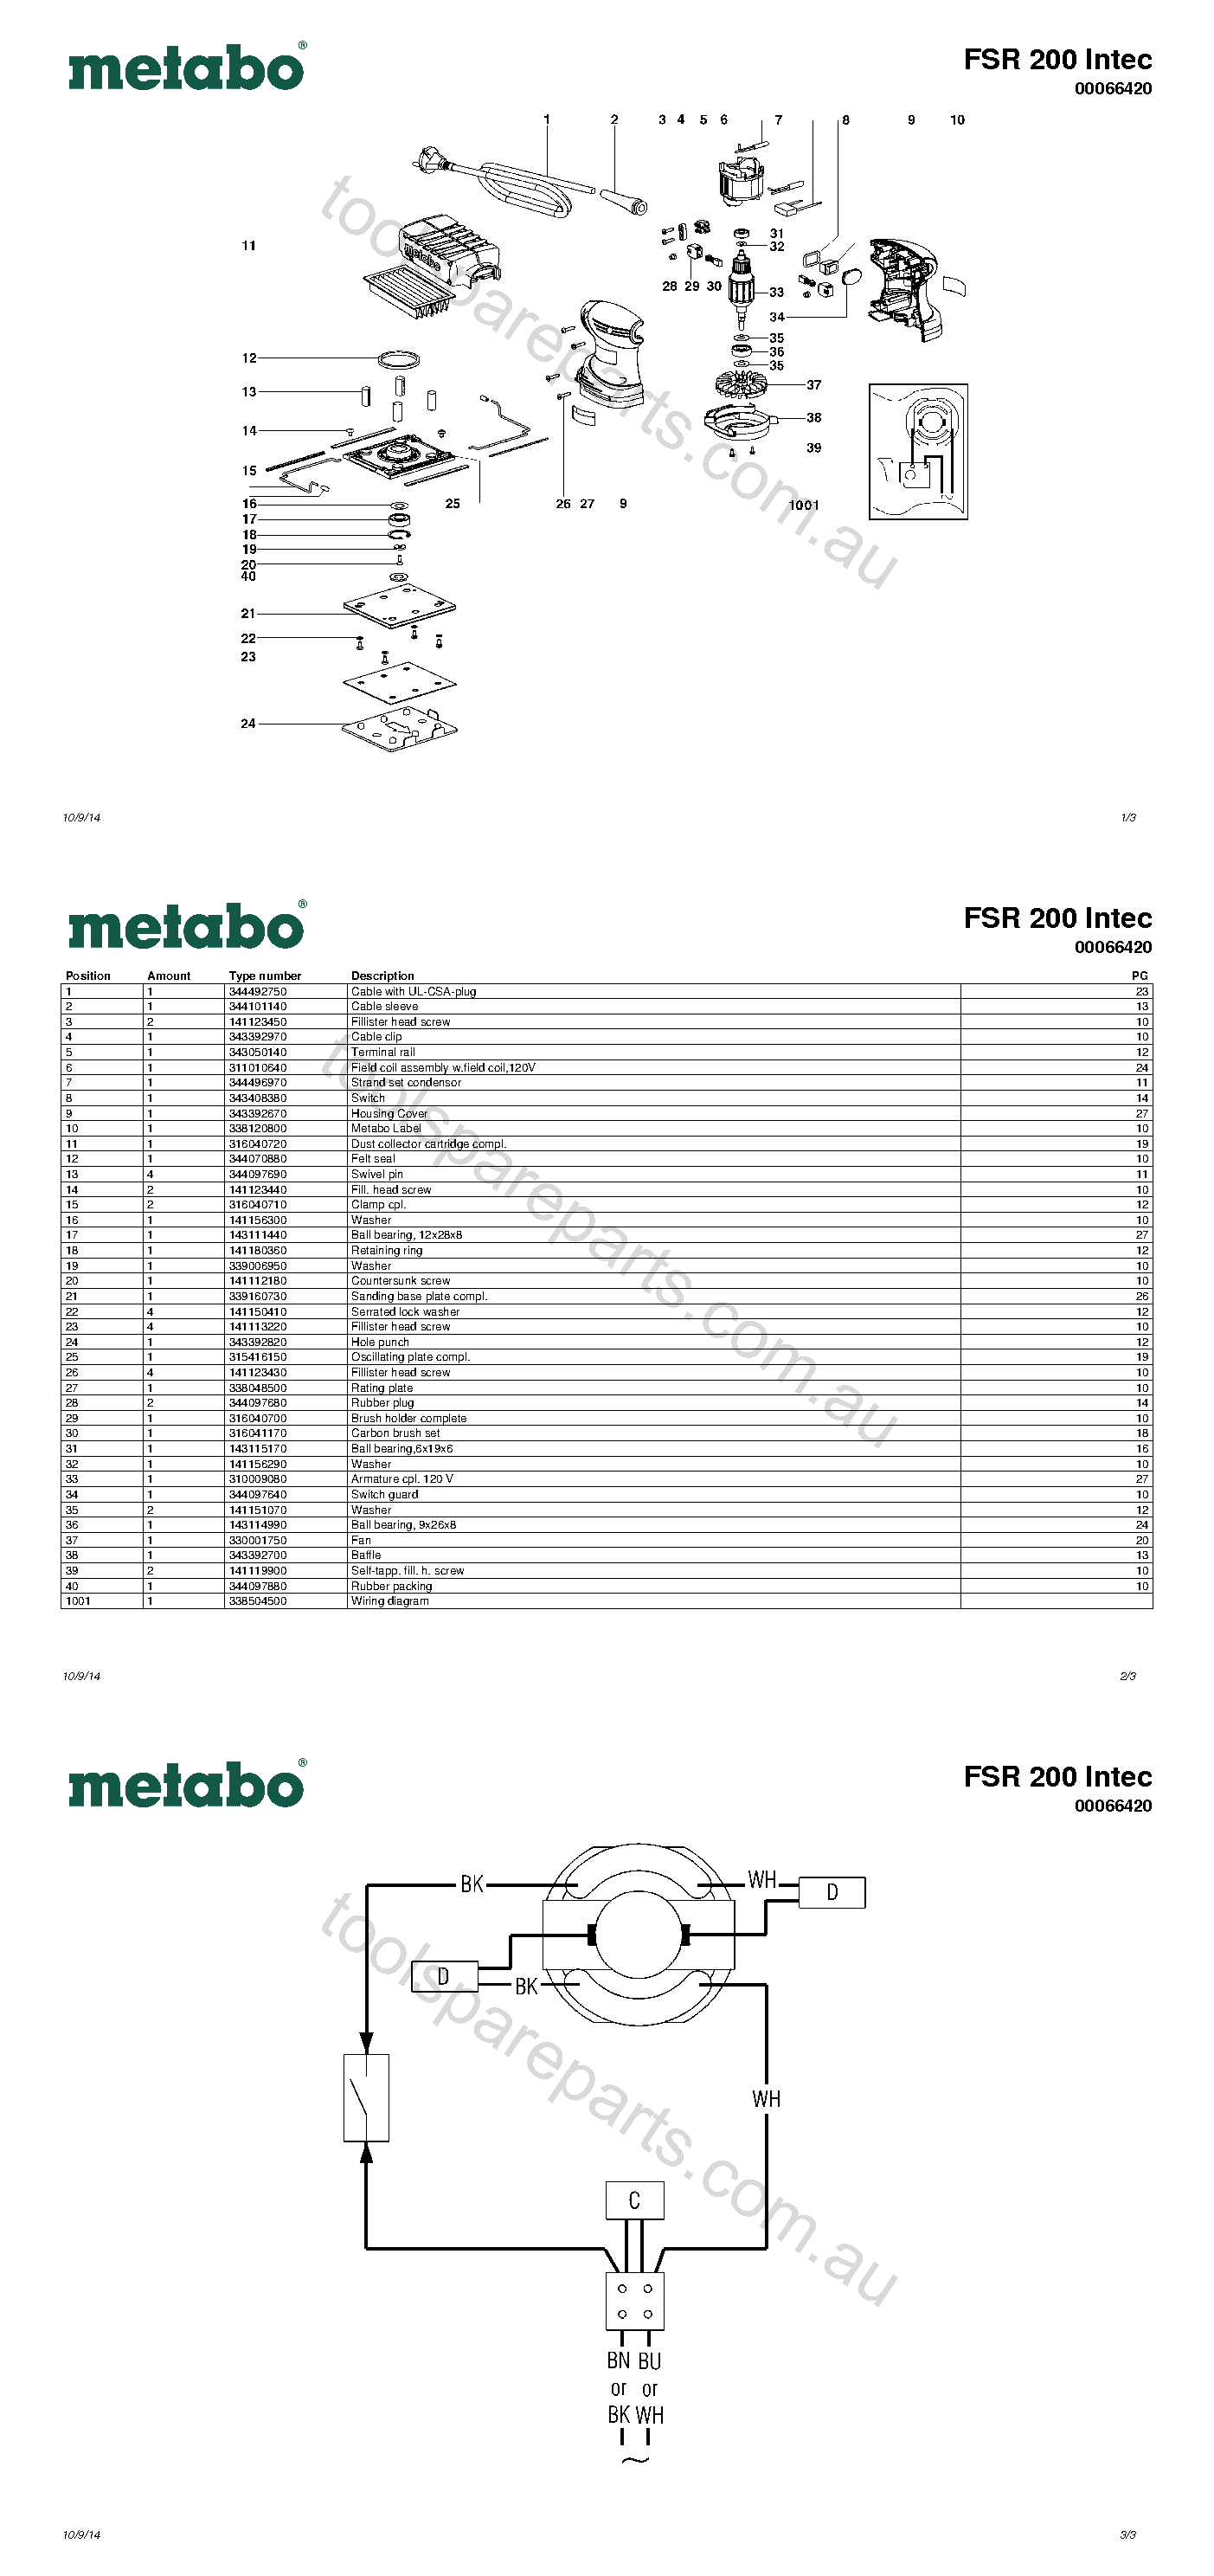 Metabo FSR 200 Intec 00066420  Diagram 1